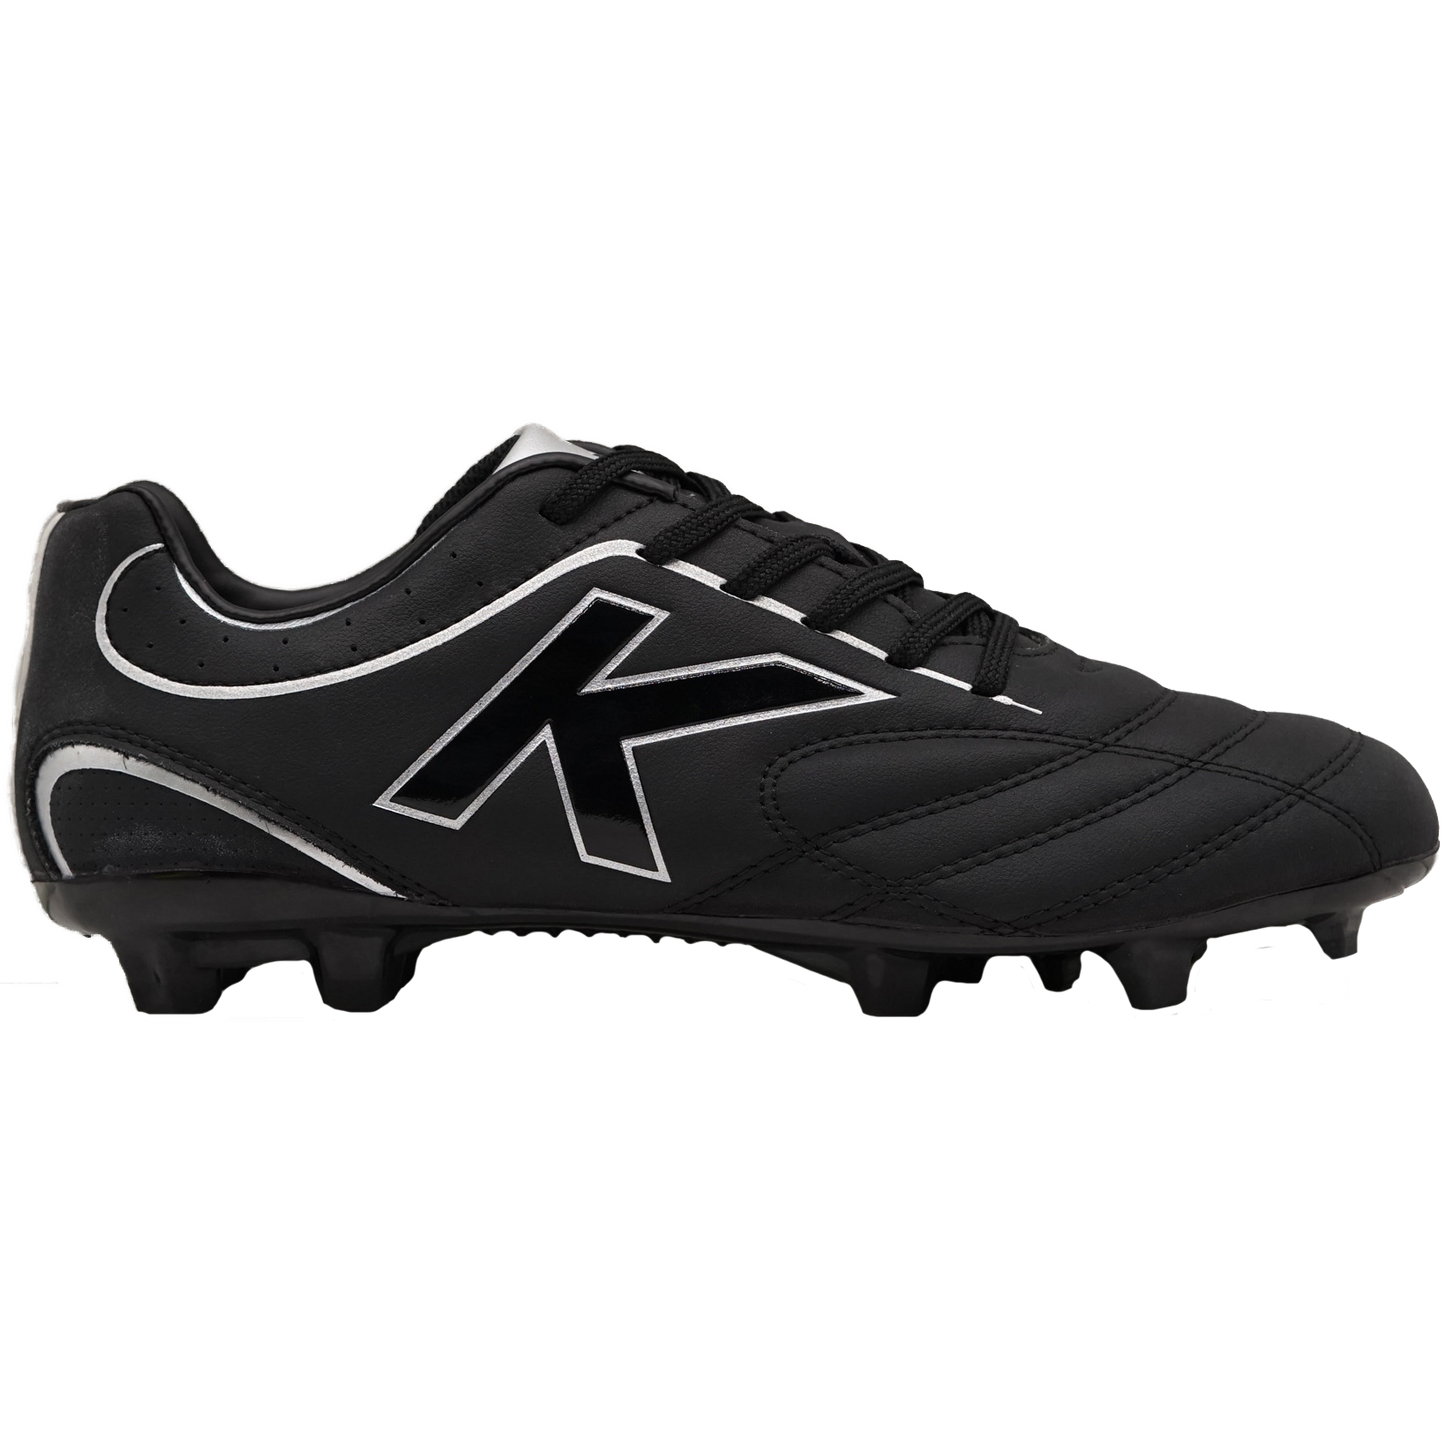 Legacy FG Football Boots- Black